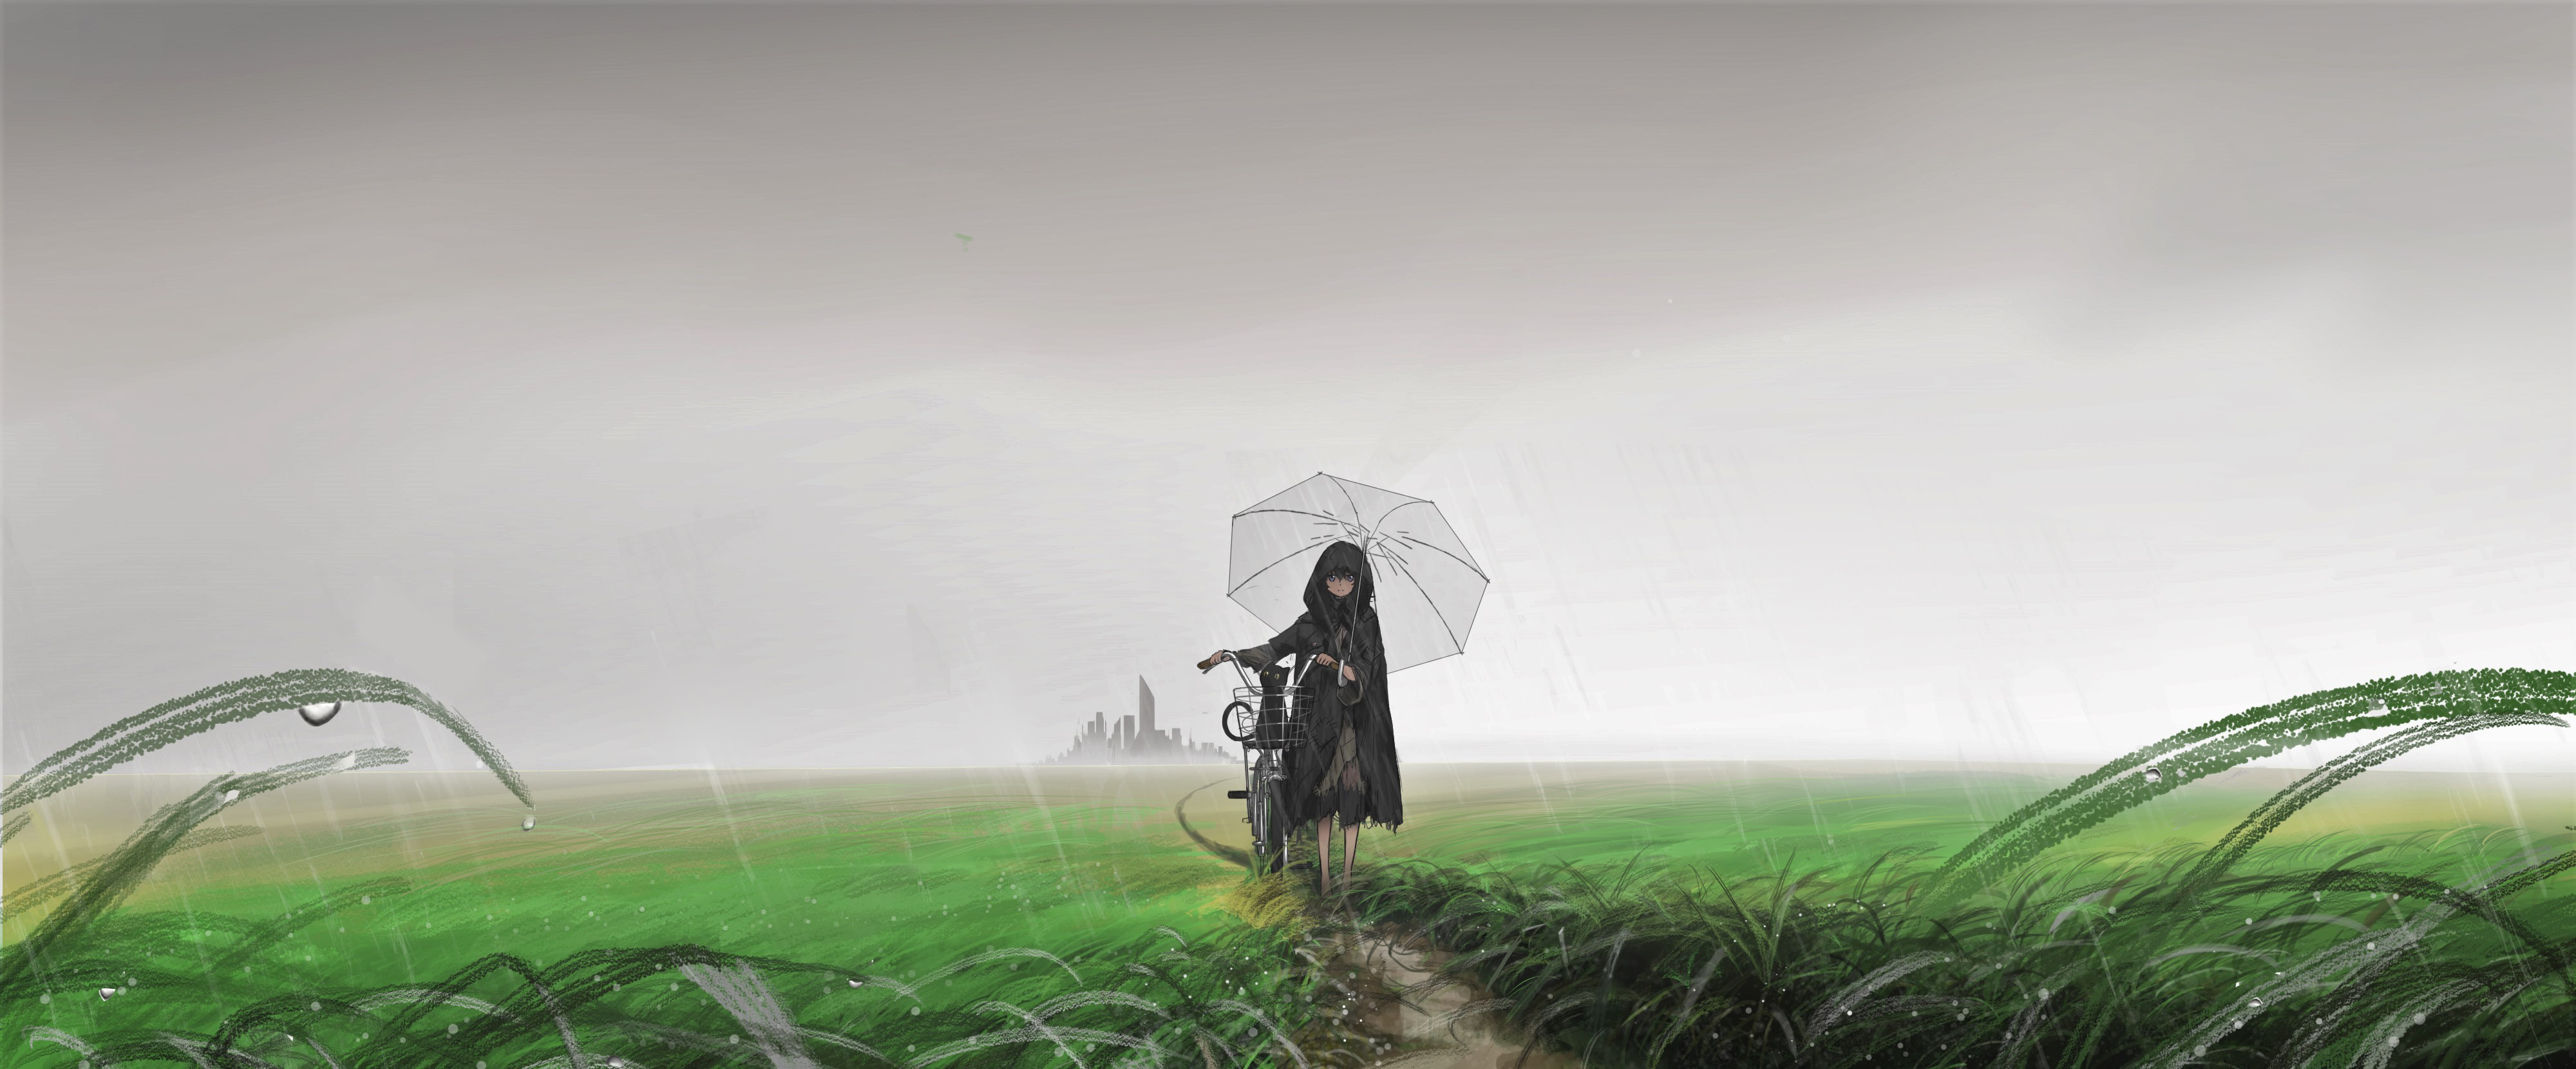 Anime Girls Original Characters Umbrella Rain Field Bicycle Cats Grass 4000x1660